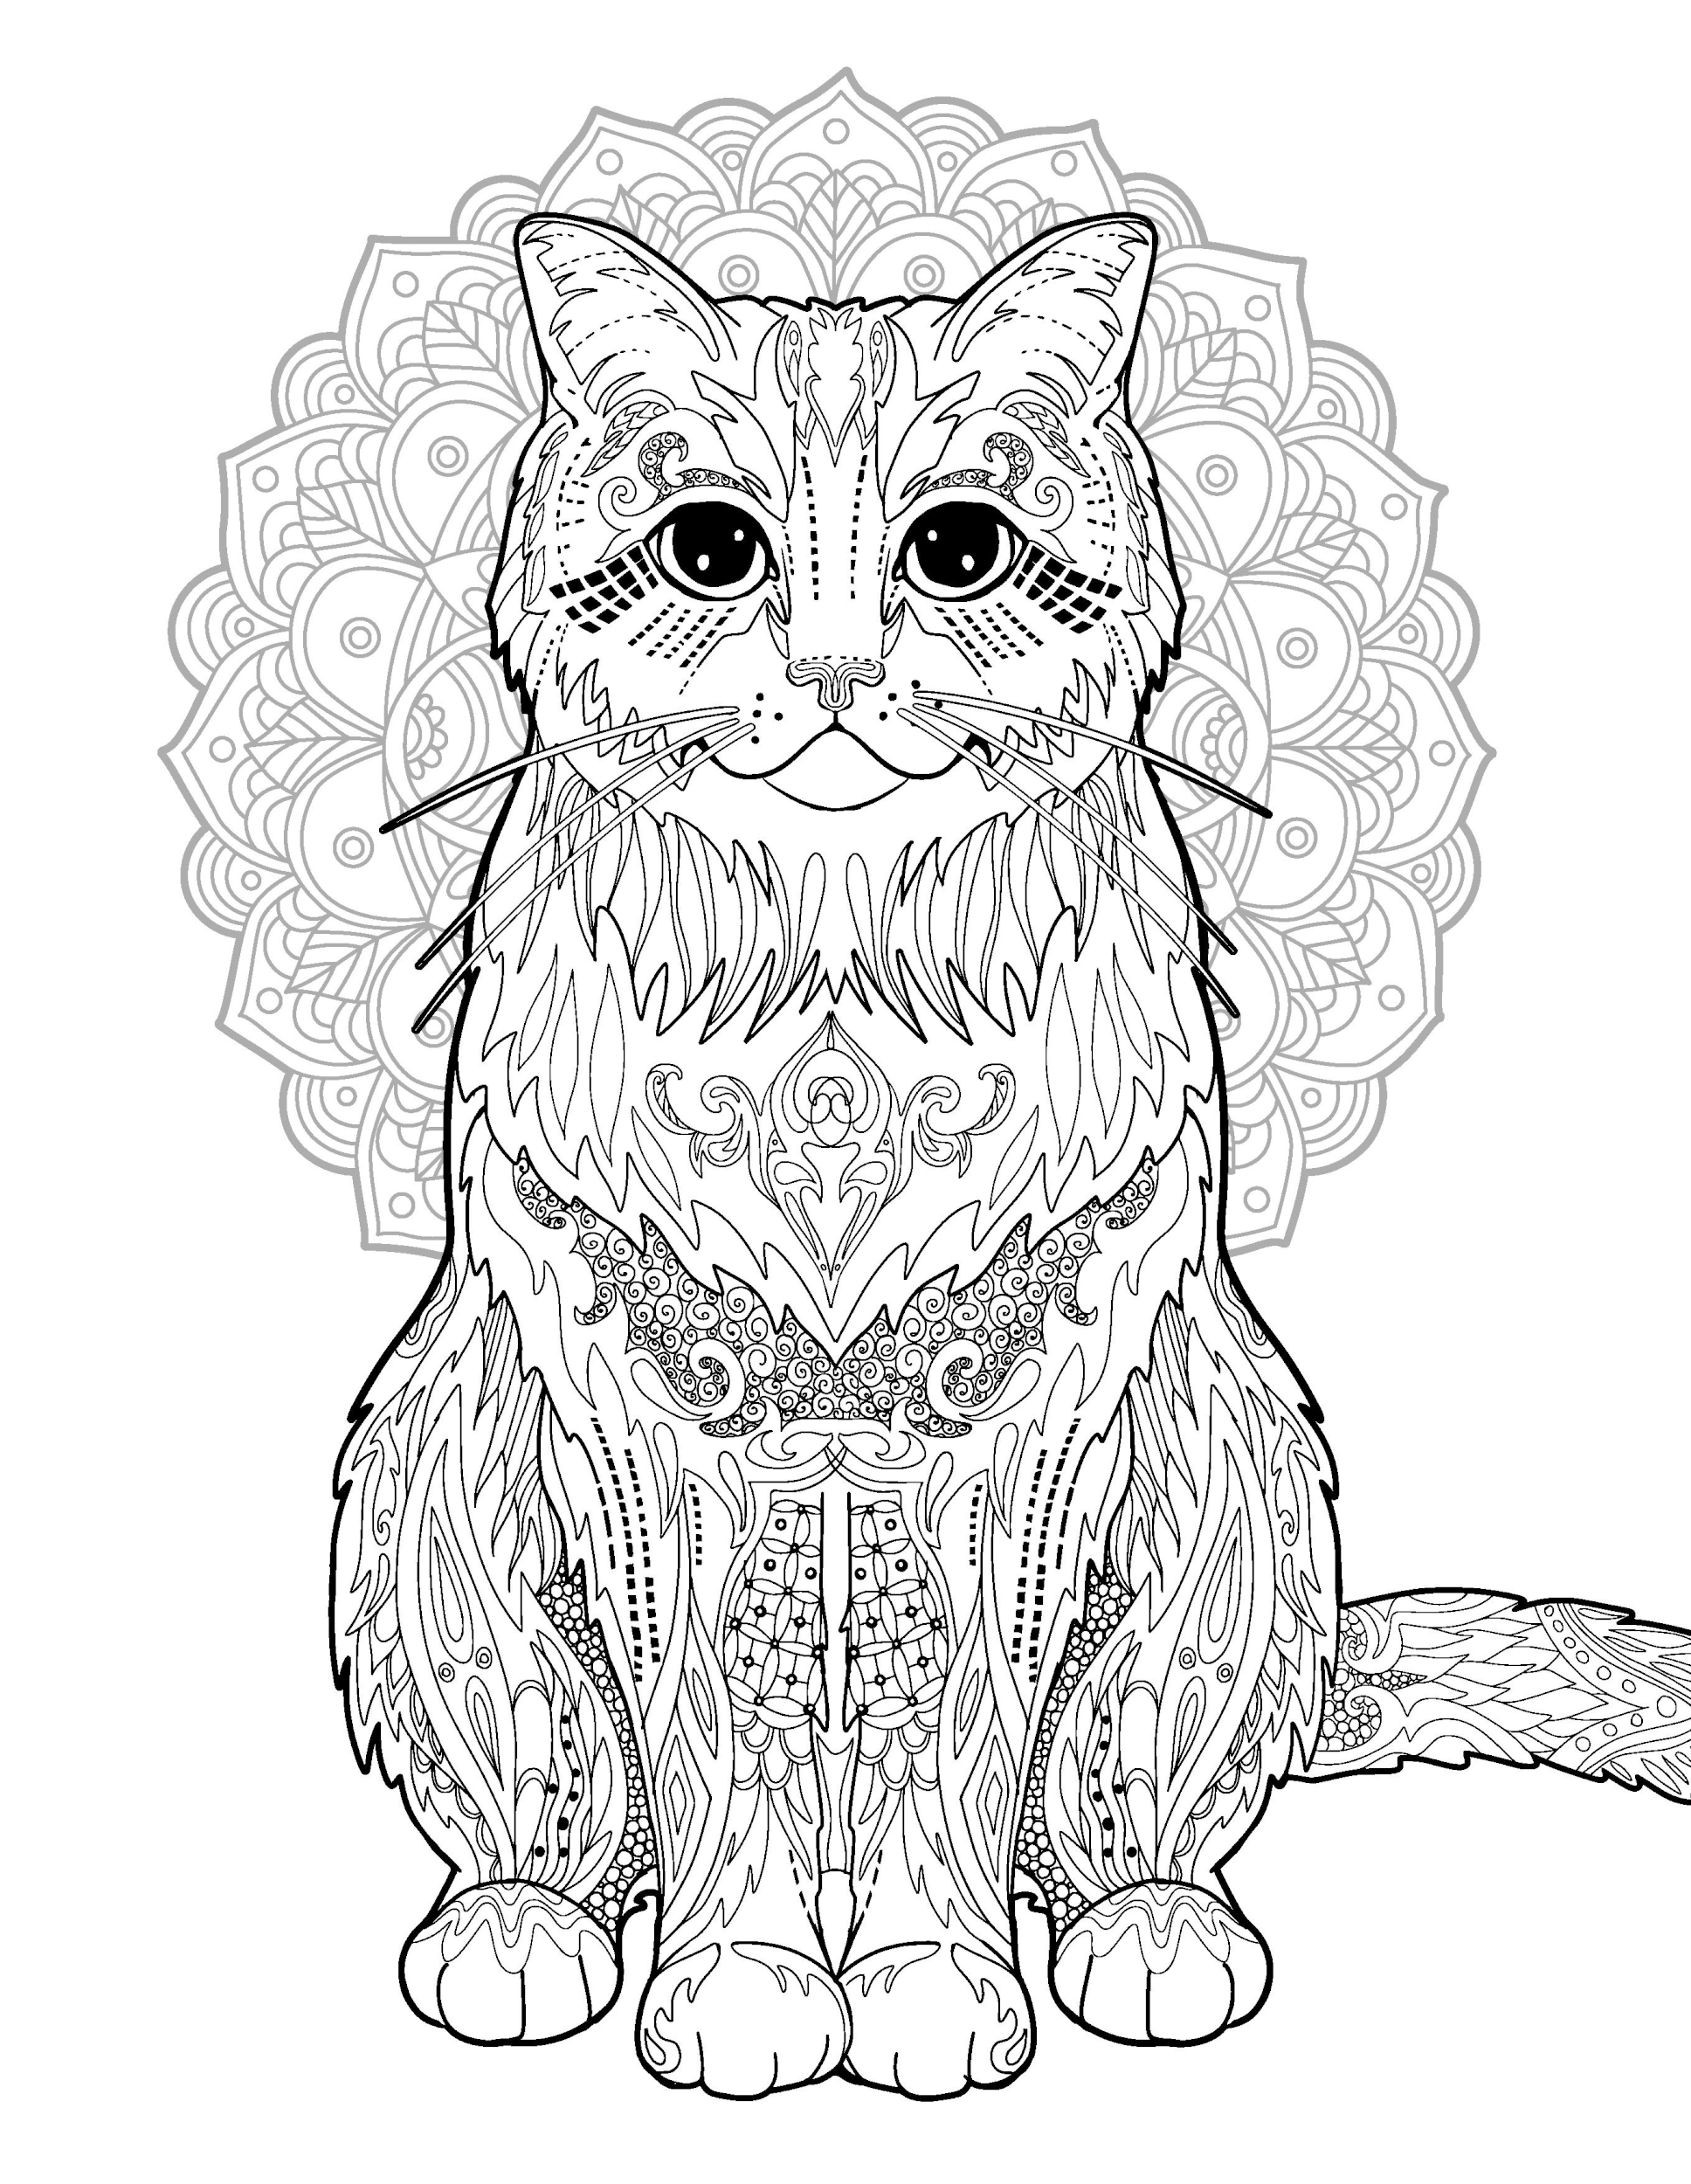 Раскраска Релакс кот с узорами